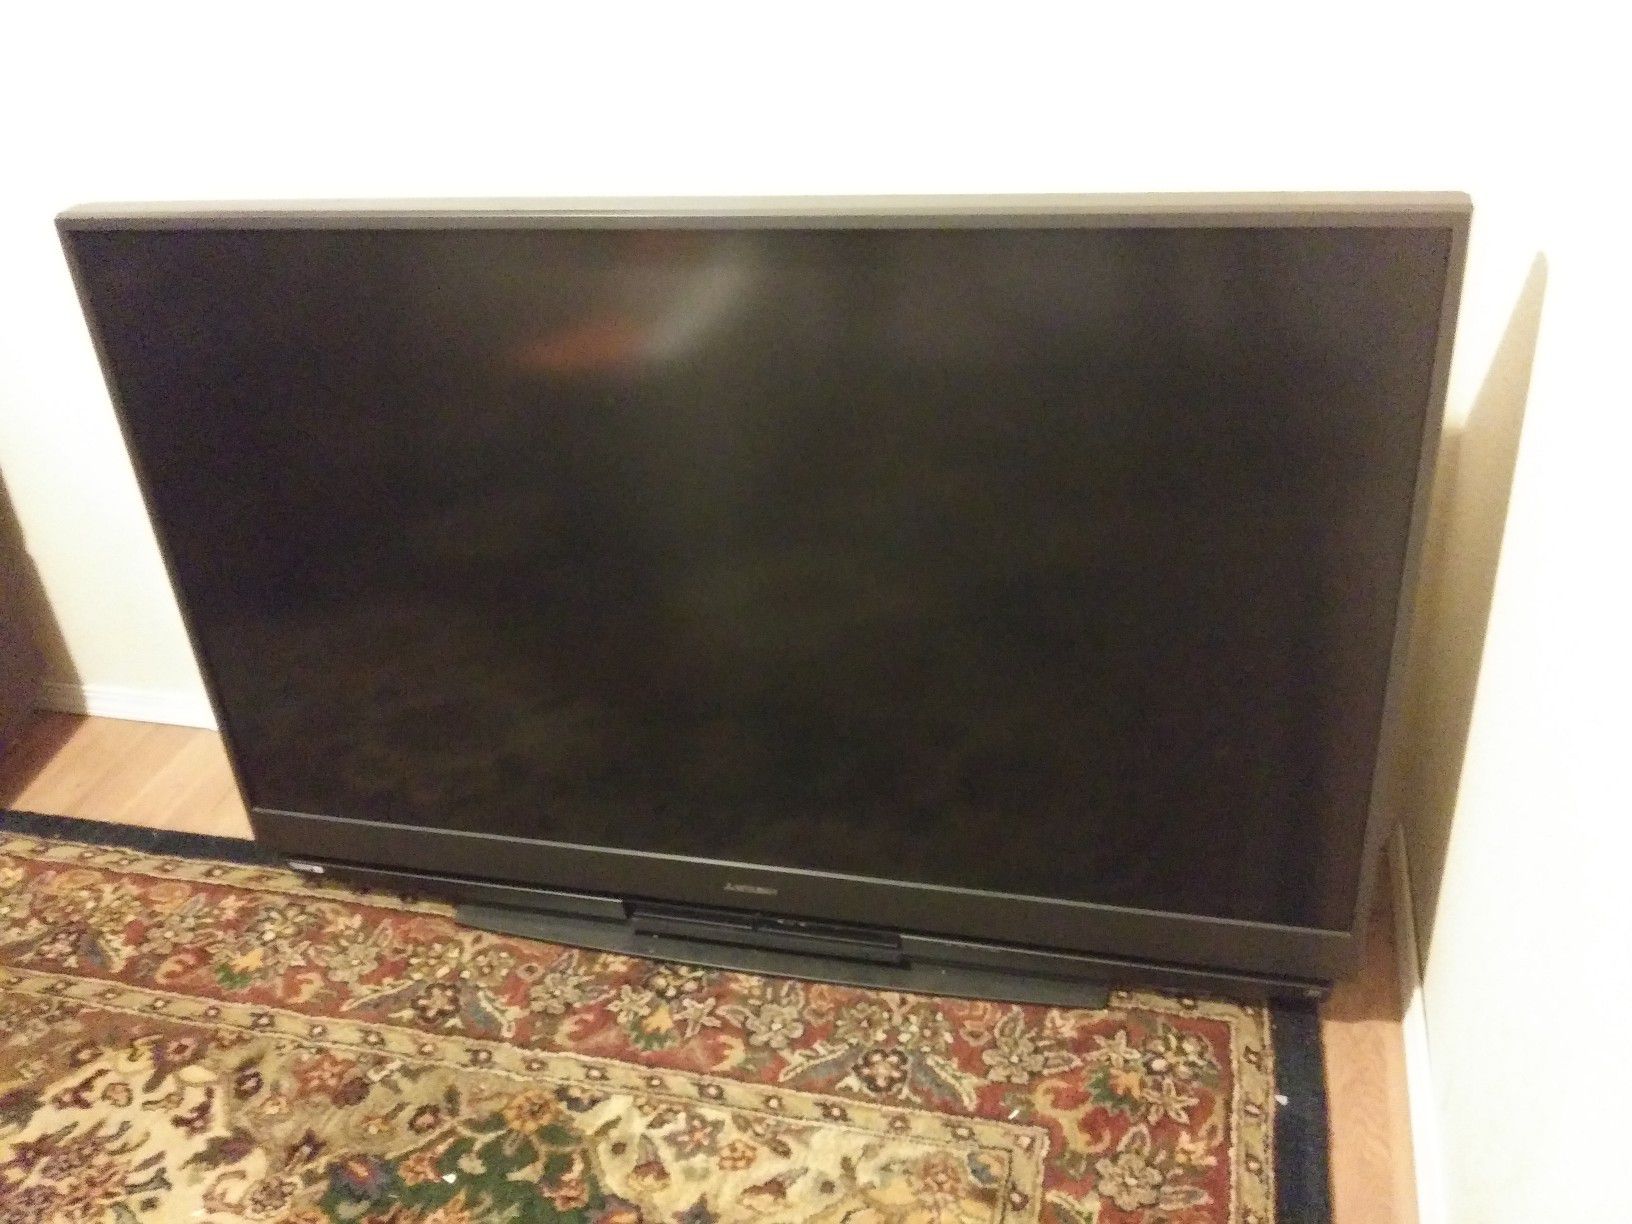 Mitsubishi 65" inch 1080p HD rear projection tv